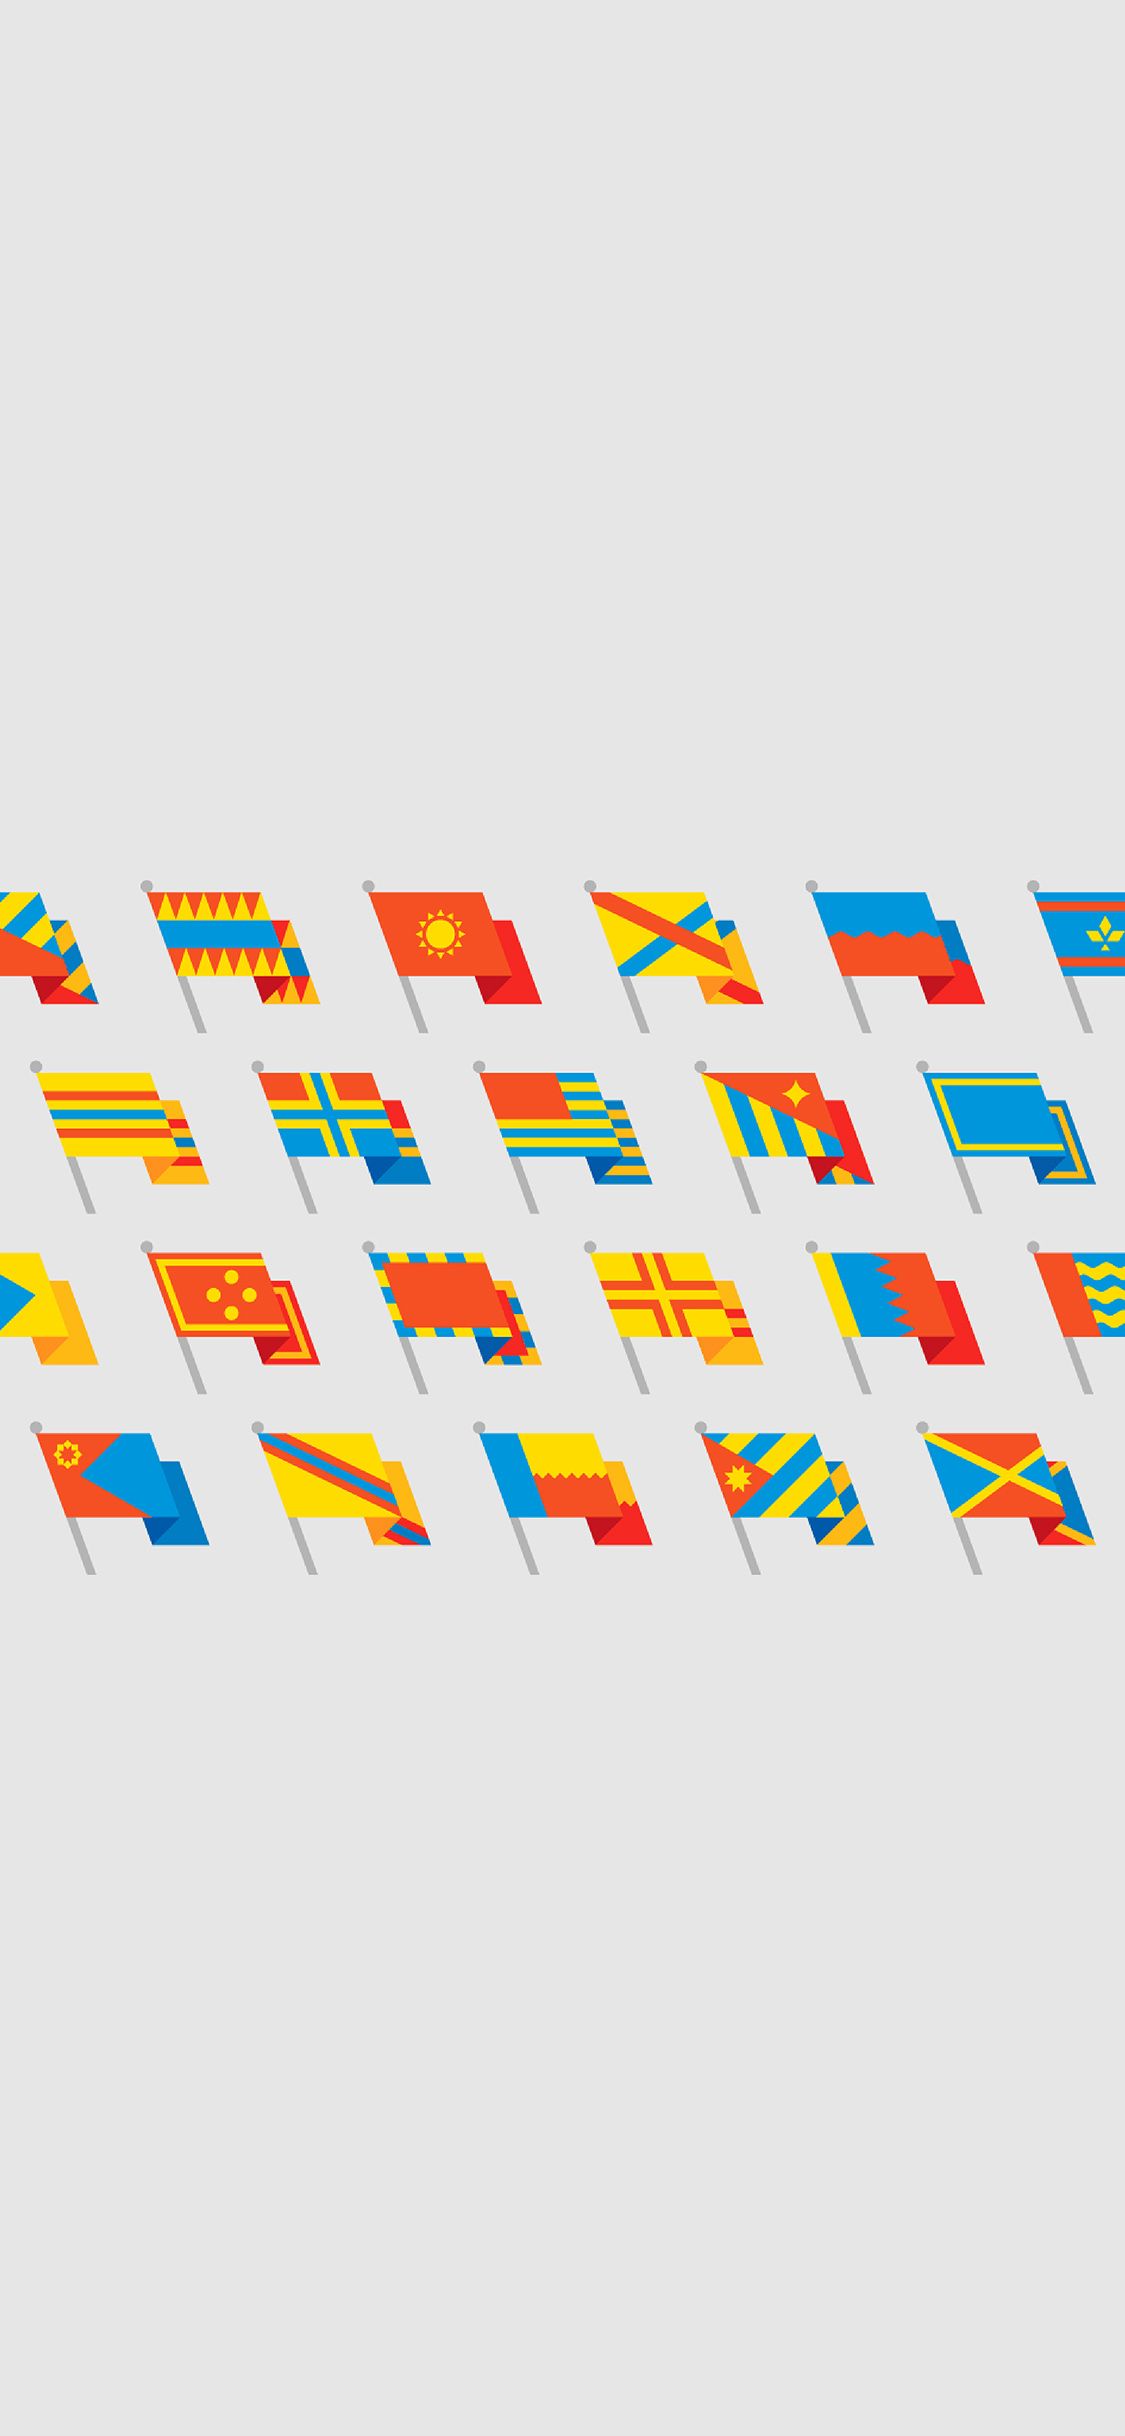 iPhone X wallpaper. flags art simple cute illustration